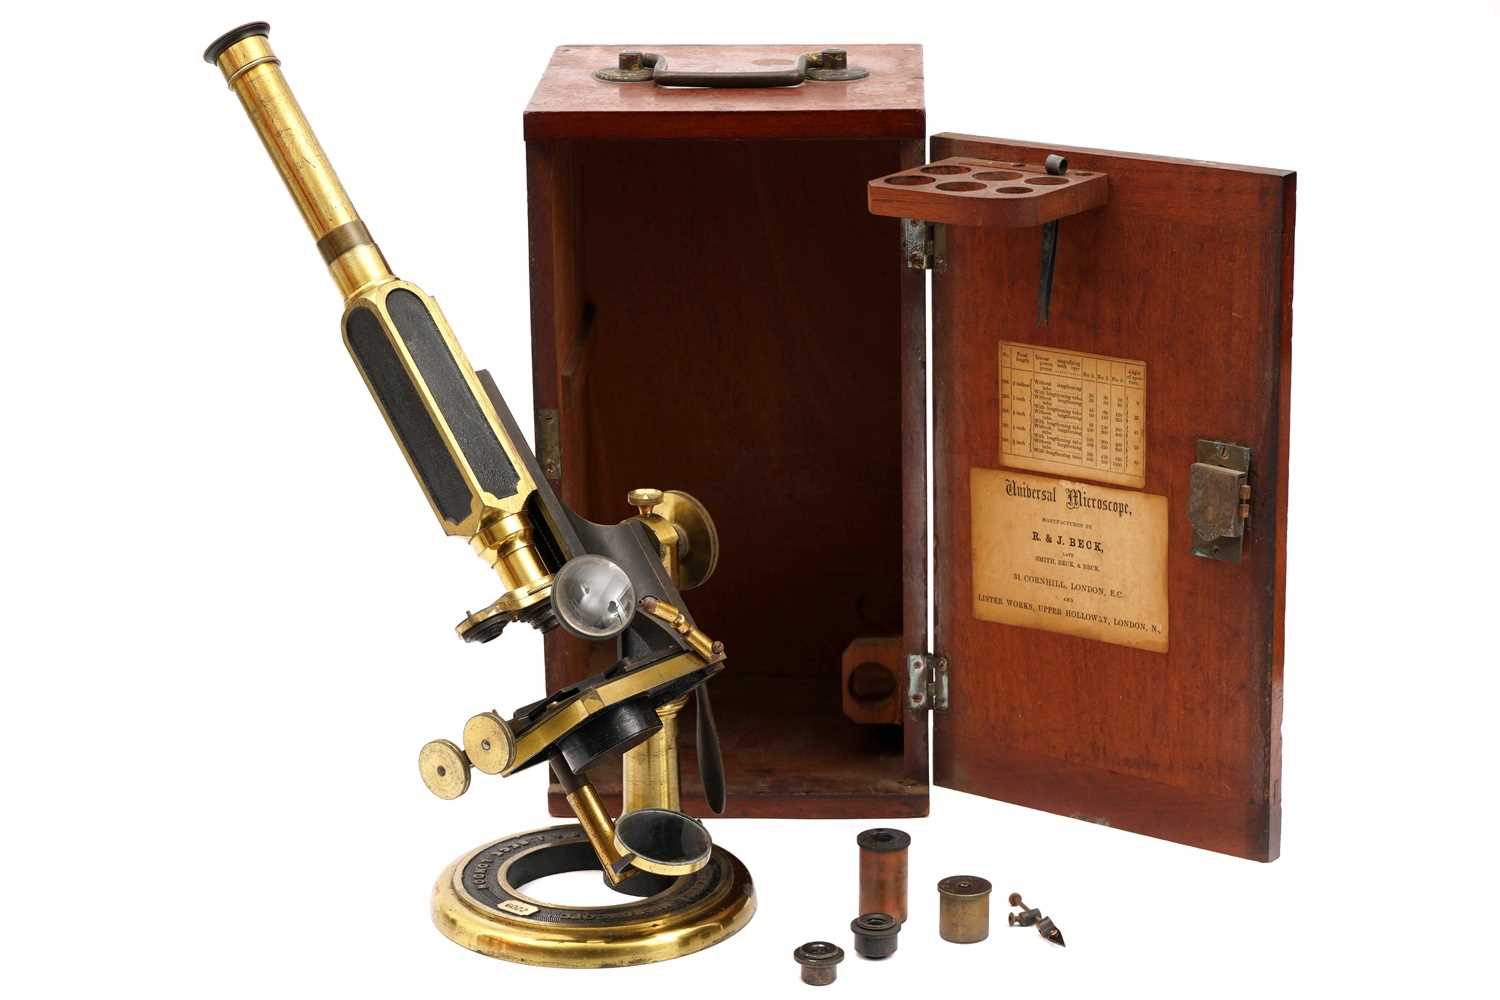 Lot 36 - An R & J Beck 'Universal' Brass Compound Microscope